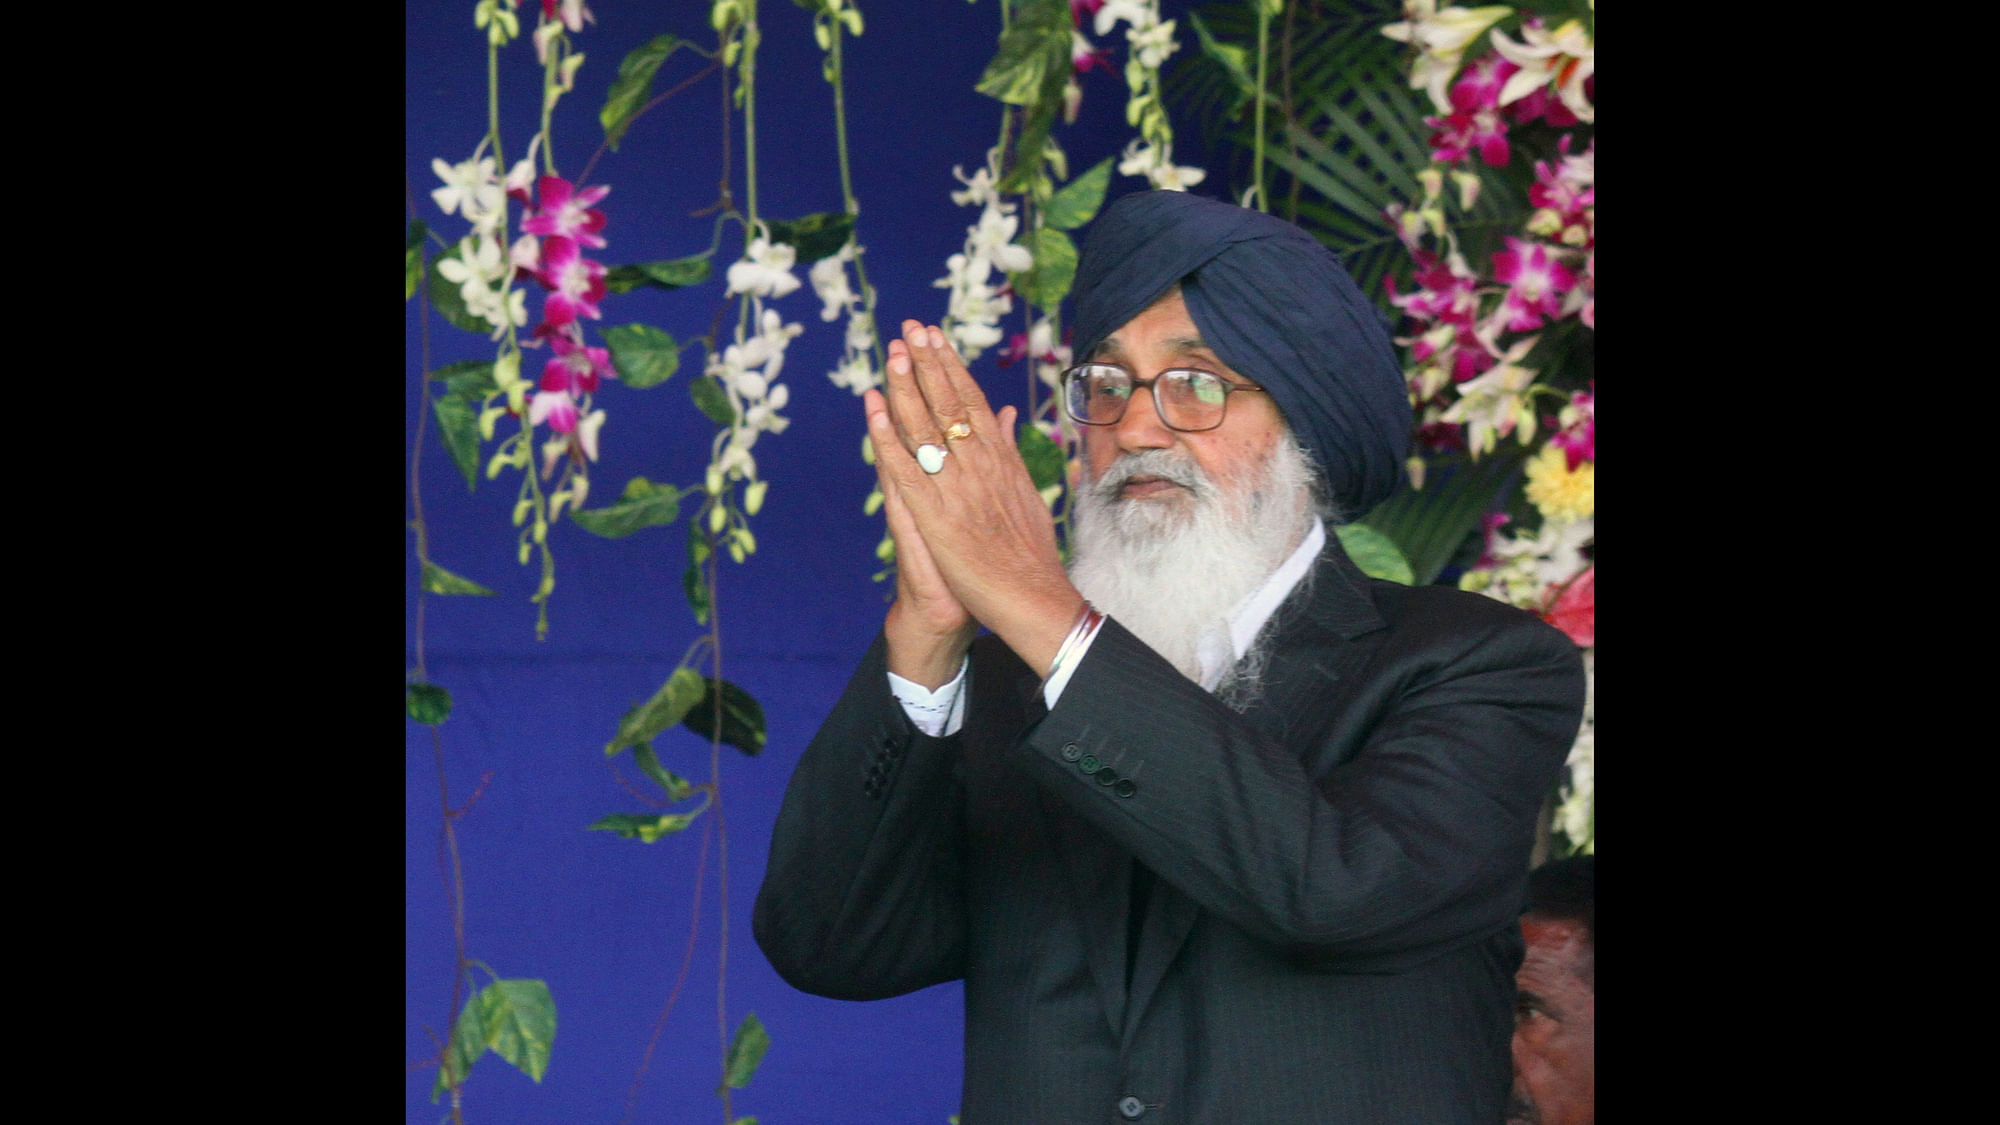 Punjab Chief Minister Parkash Singh Badal. (Photo: Reuters)